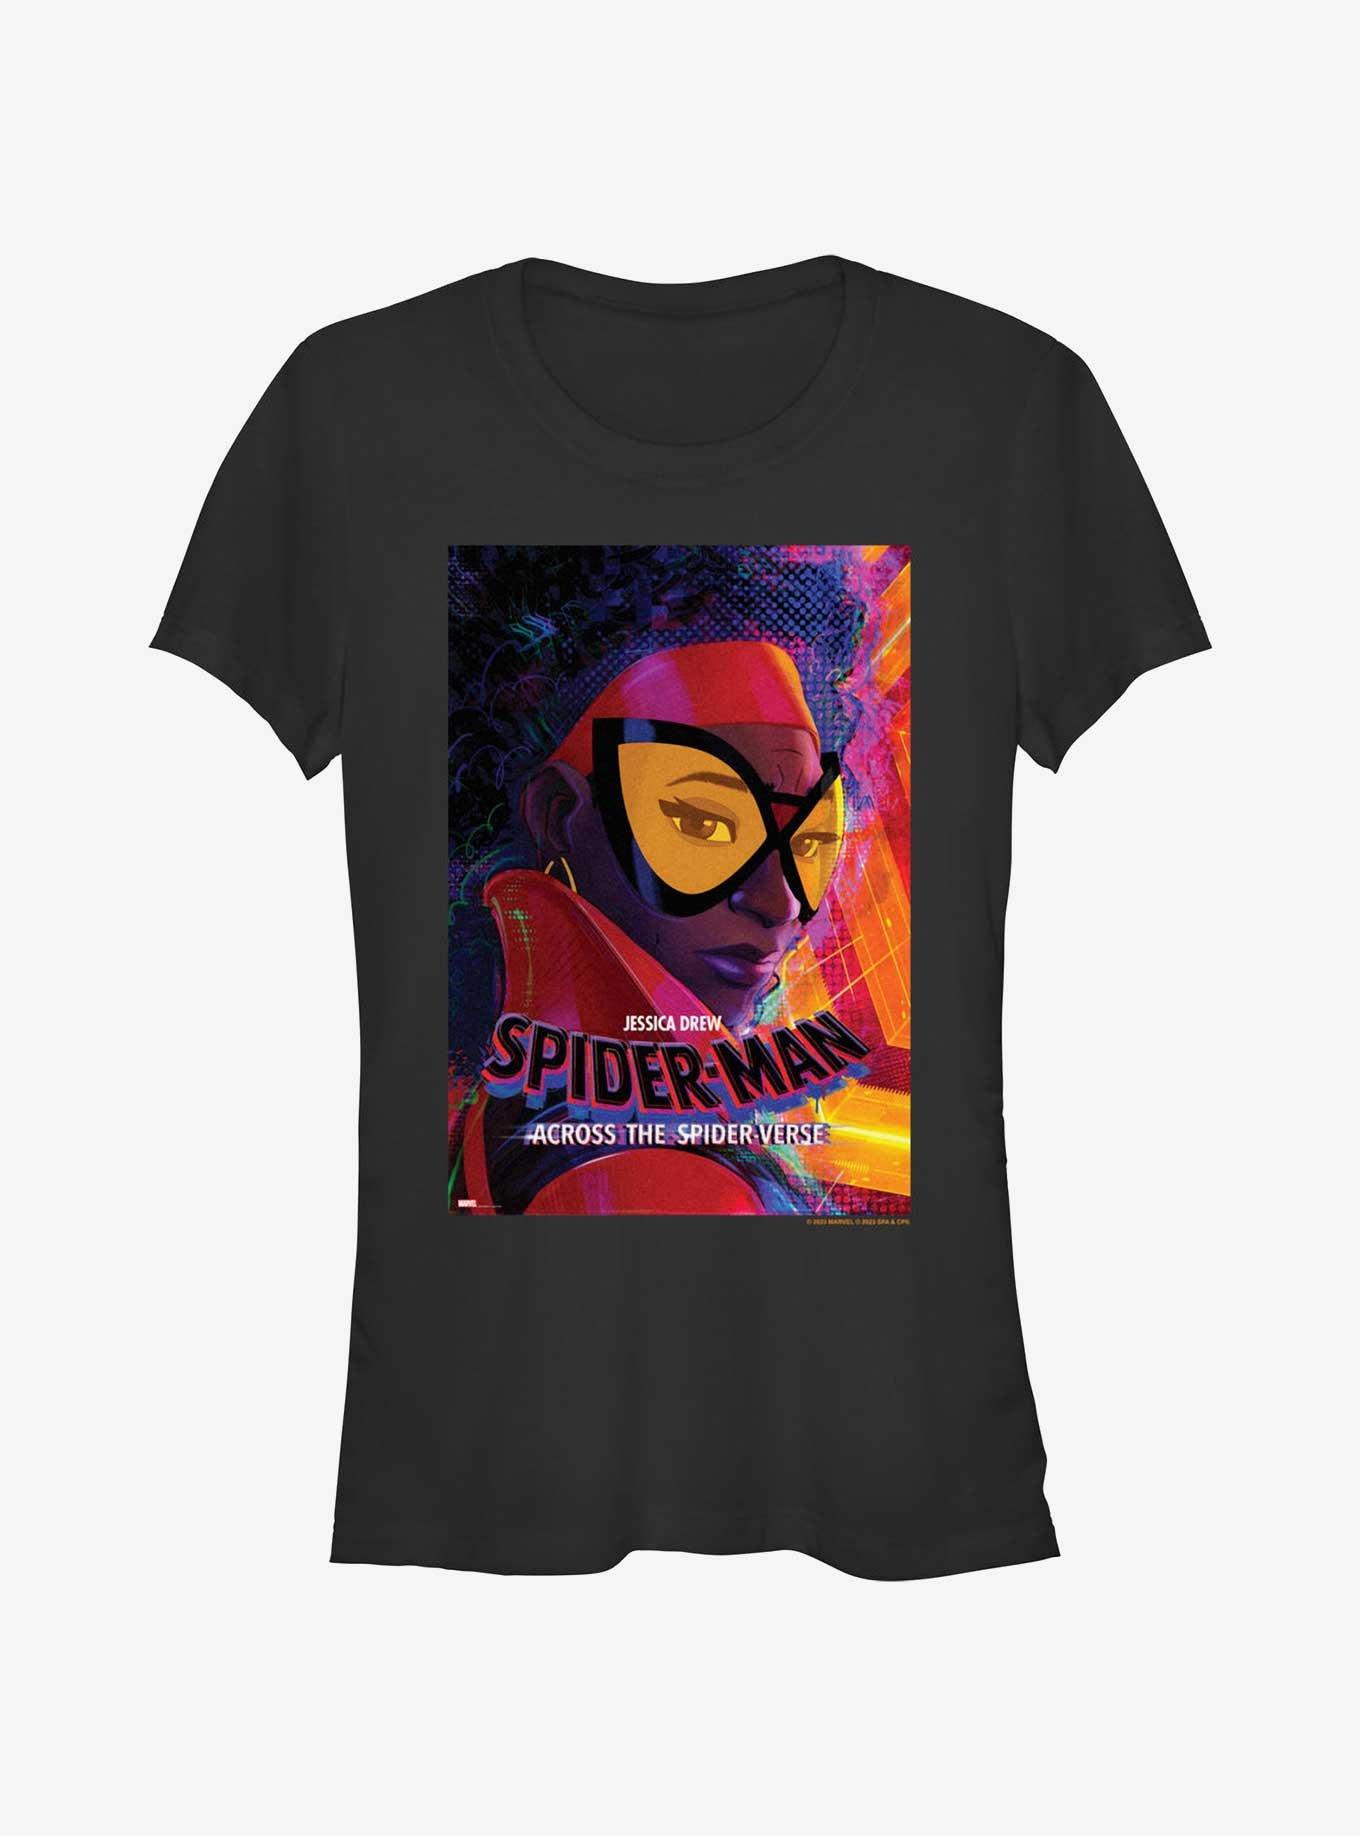 Spider-Man: Across The Spider-Verse Jessica Drew Spider-Woman Poster Girls T-Shirt